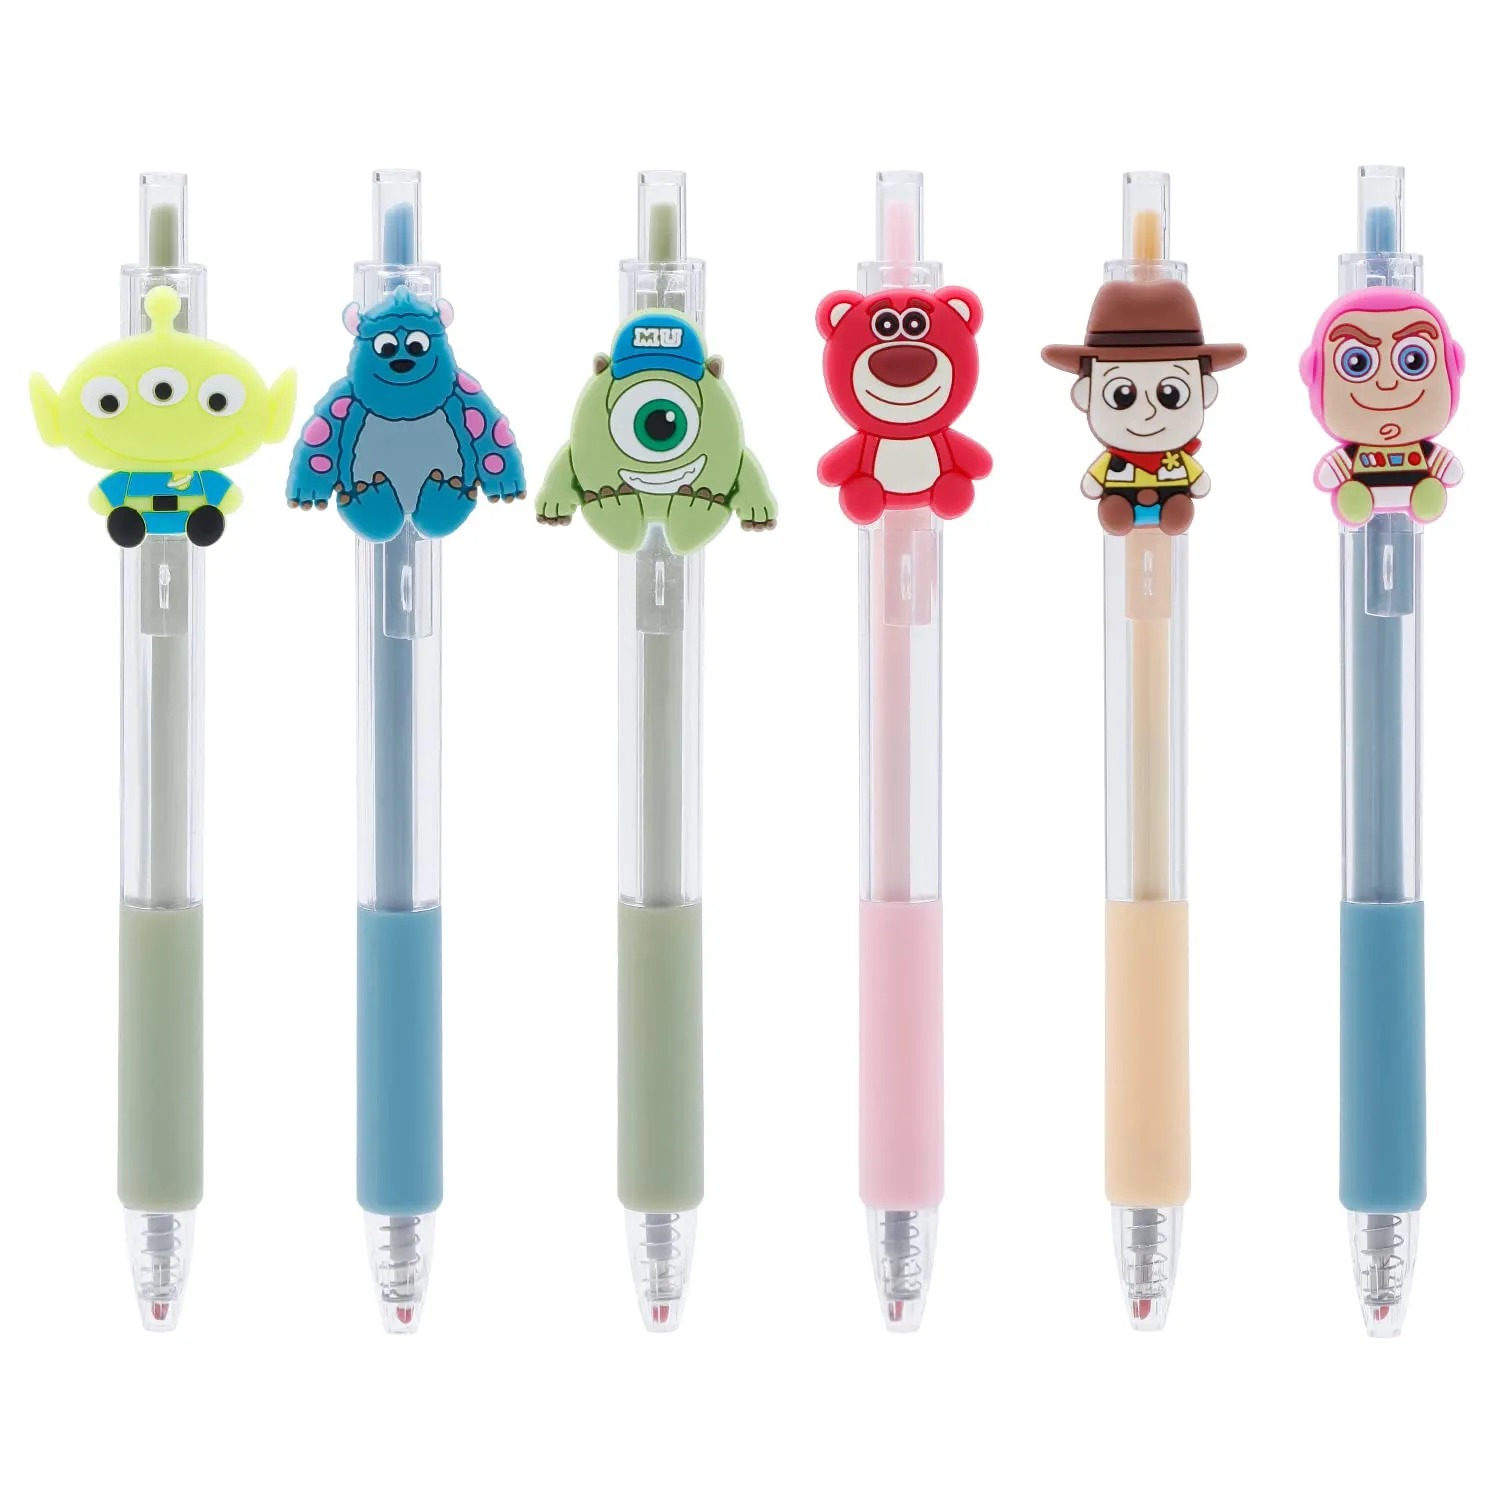 mini ballpoint pen cute cartoon retractable ball pen fun pens for kids gifts party favors school supplies mushroom style